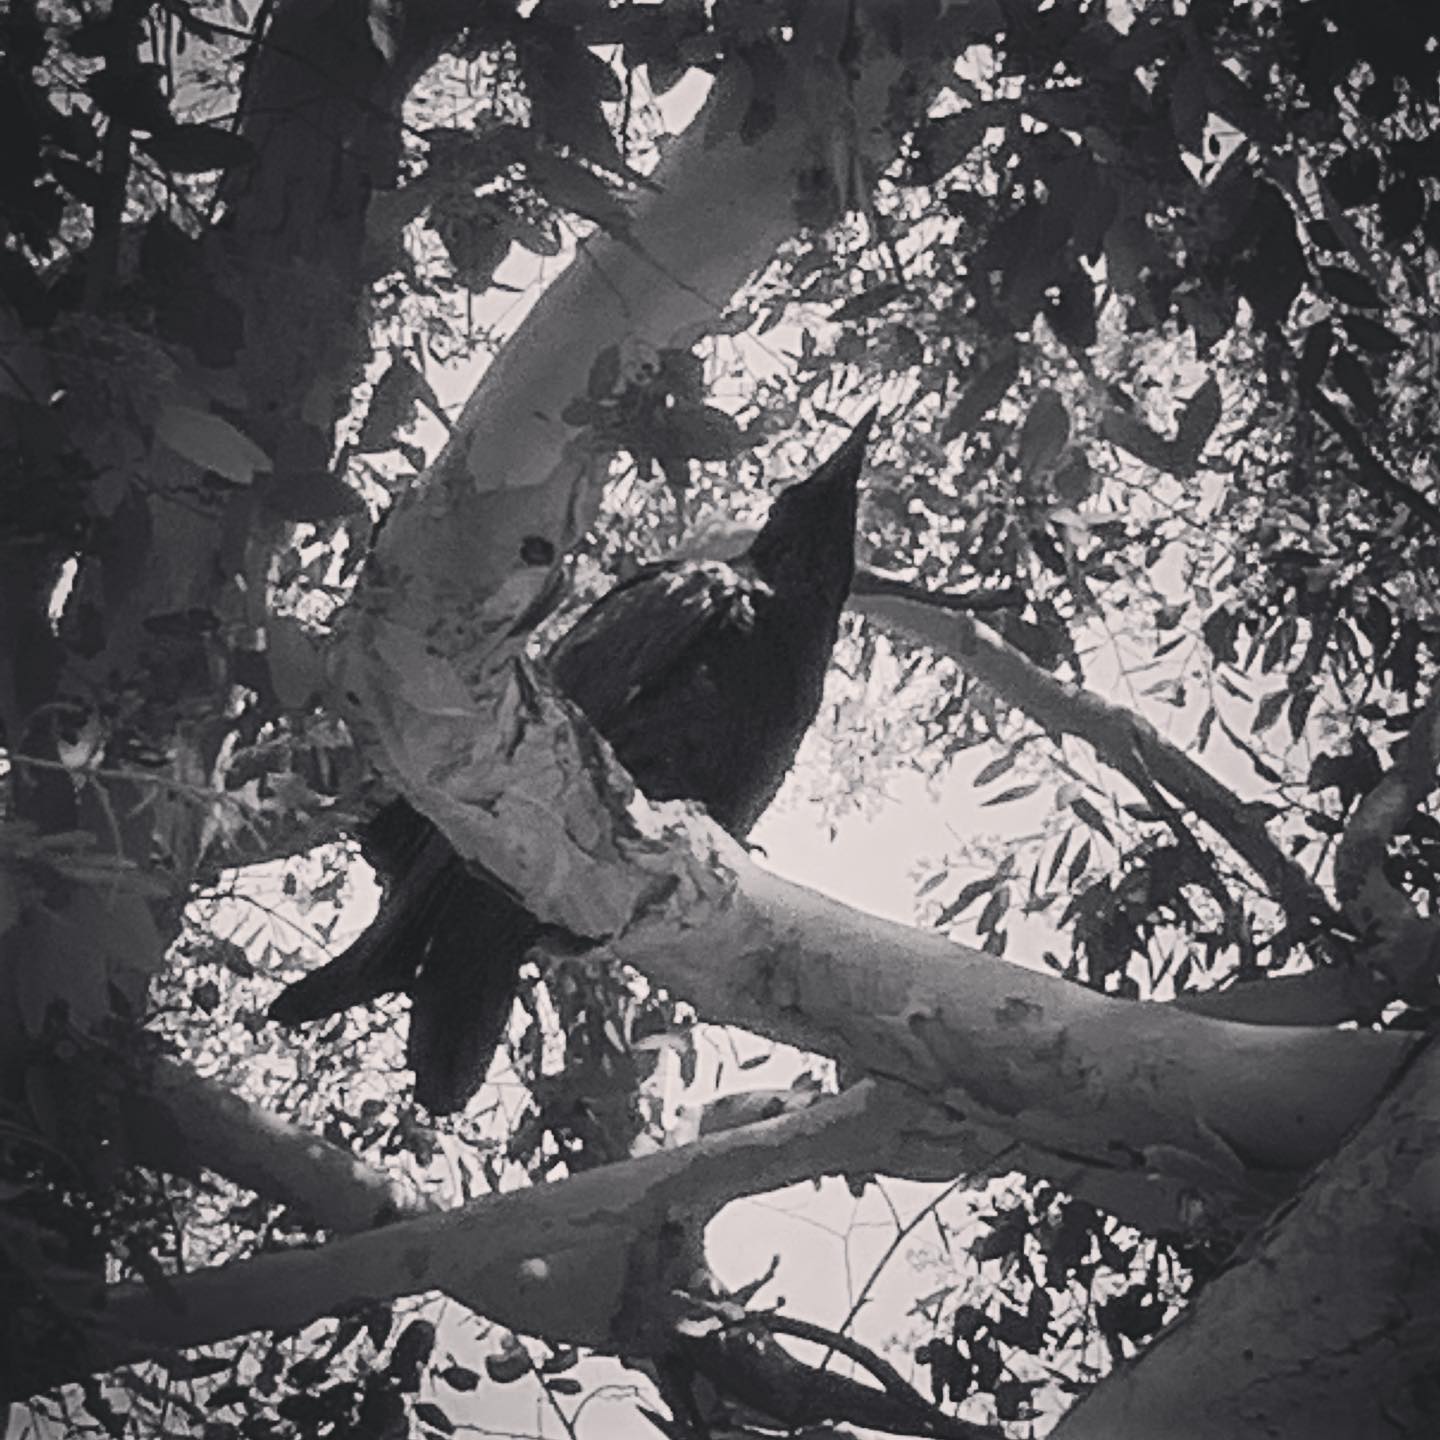 Arlington Gardens via Instagram [Photo]